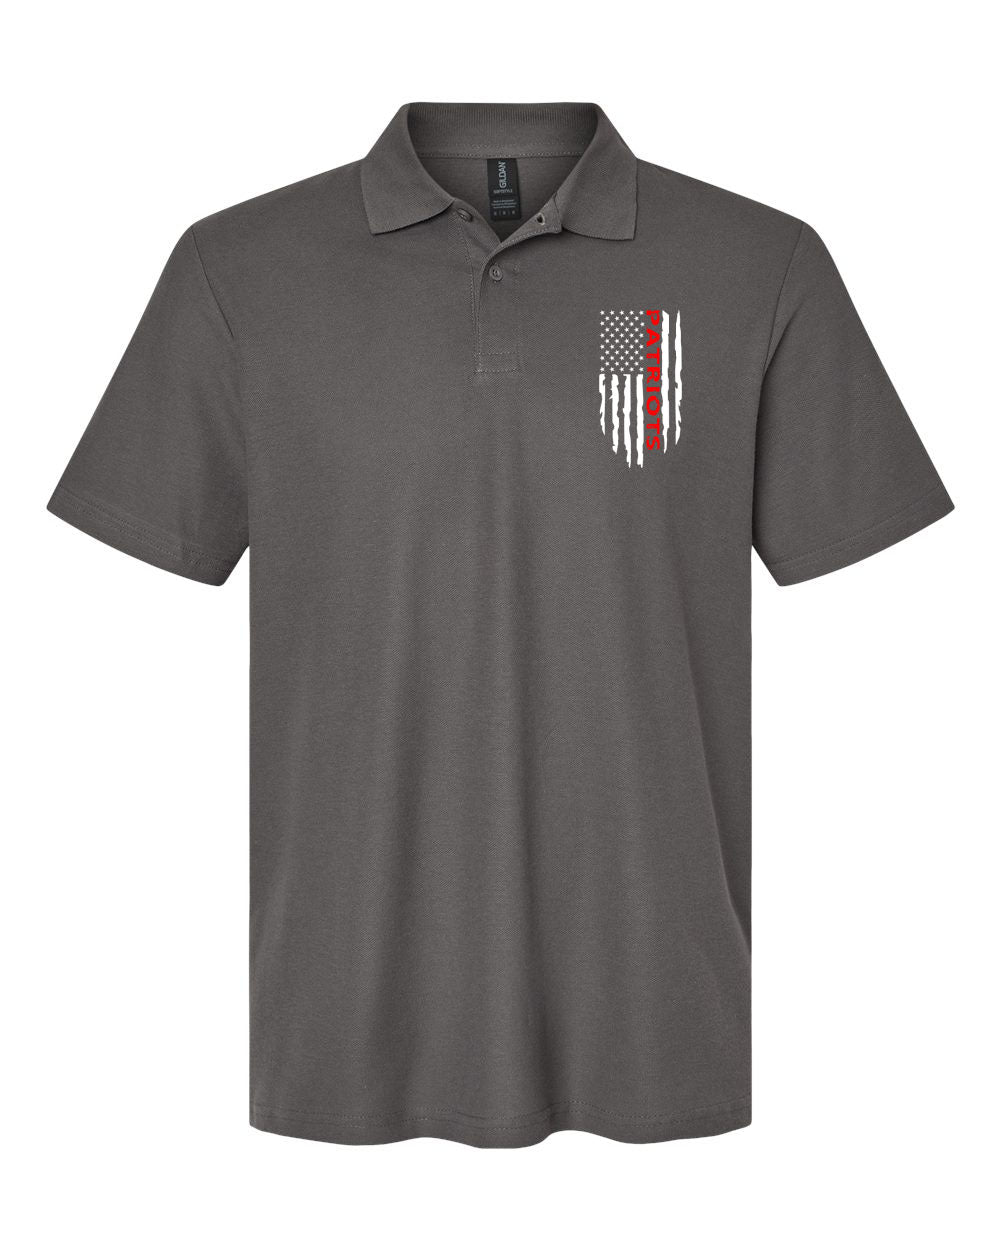 North Warren Design 11 Polo T-Shirt